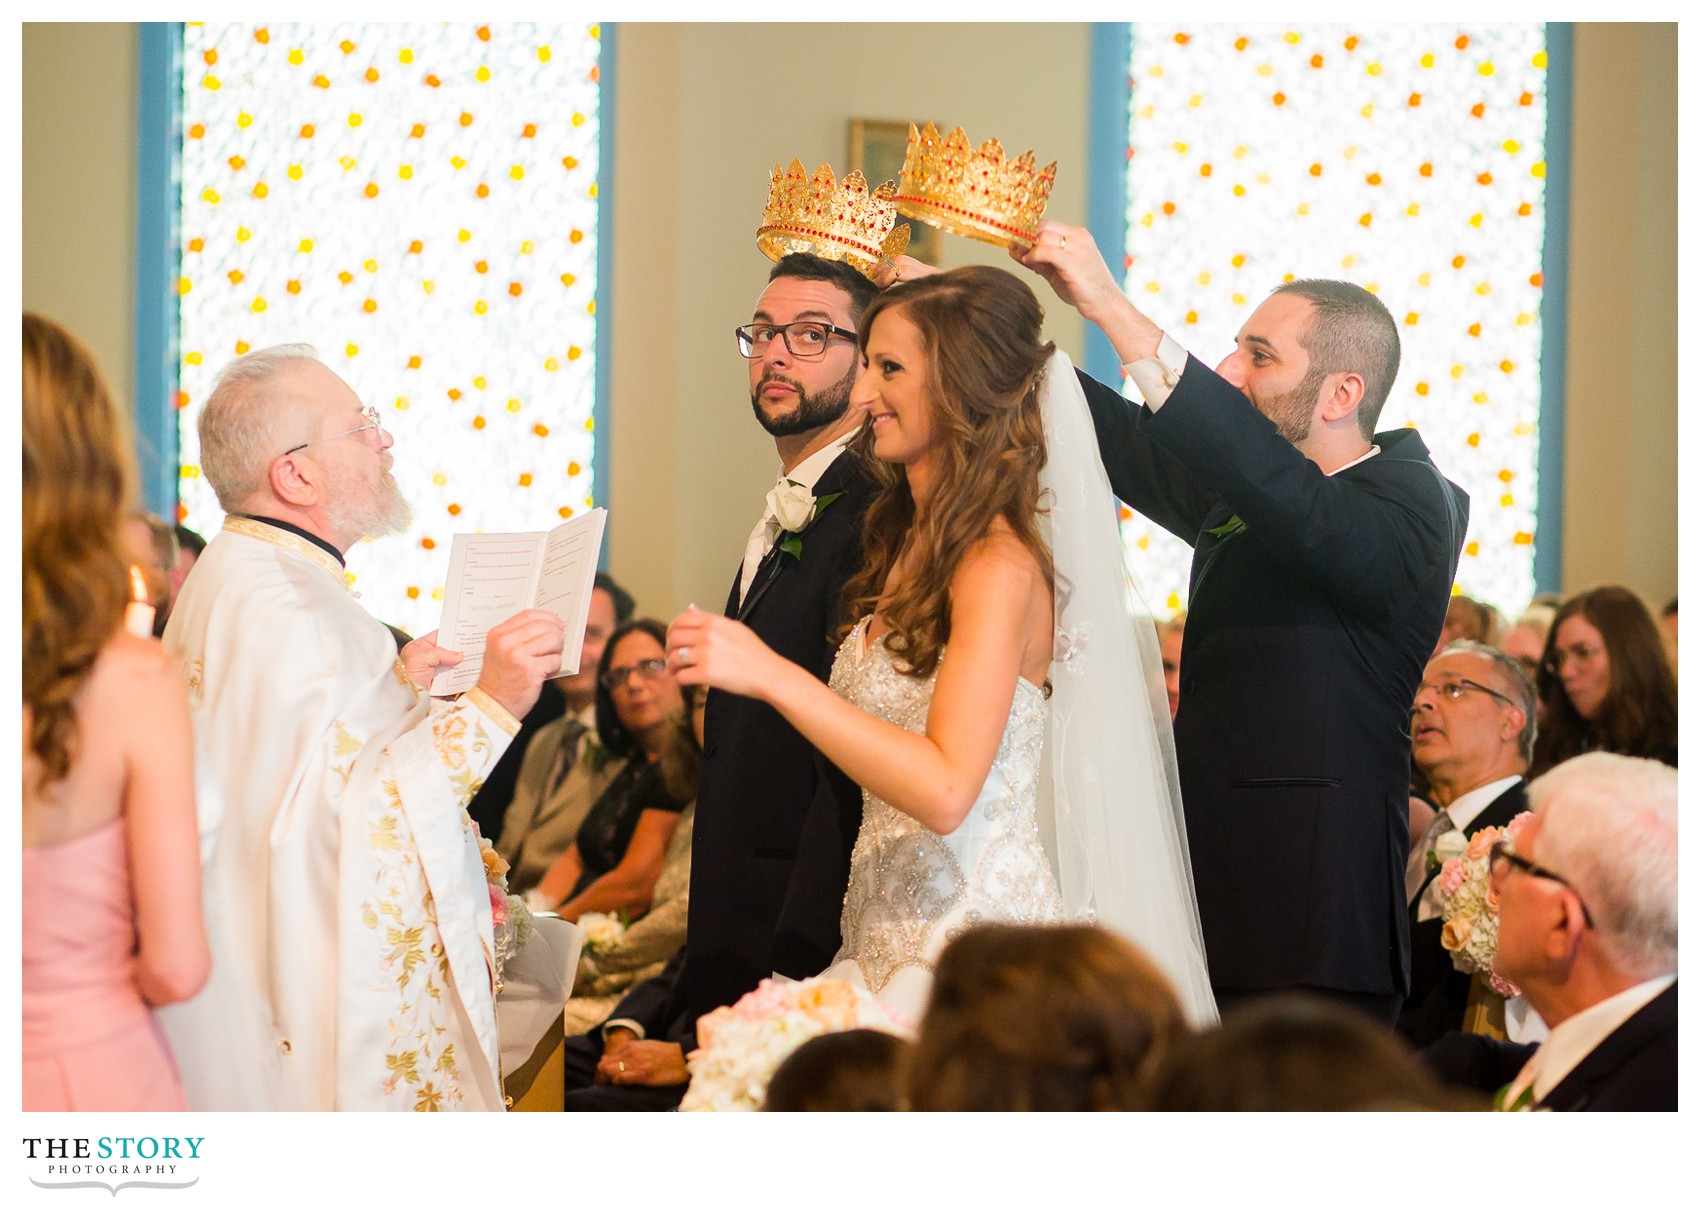 Orthodox wedding ceremony photos in the Finger Lakes